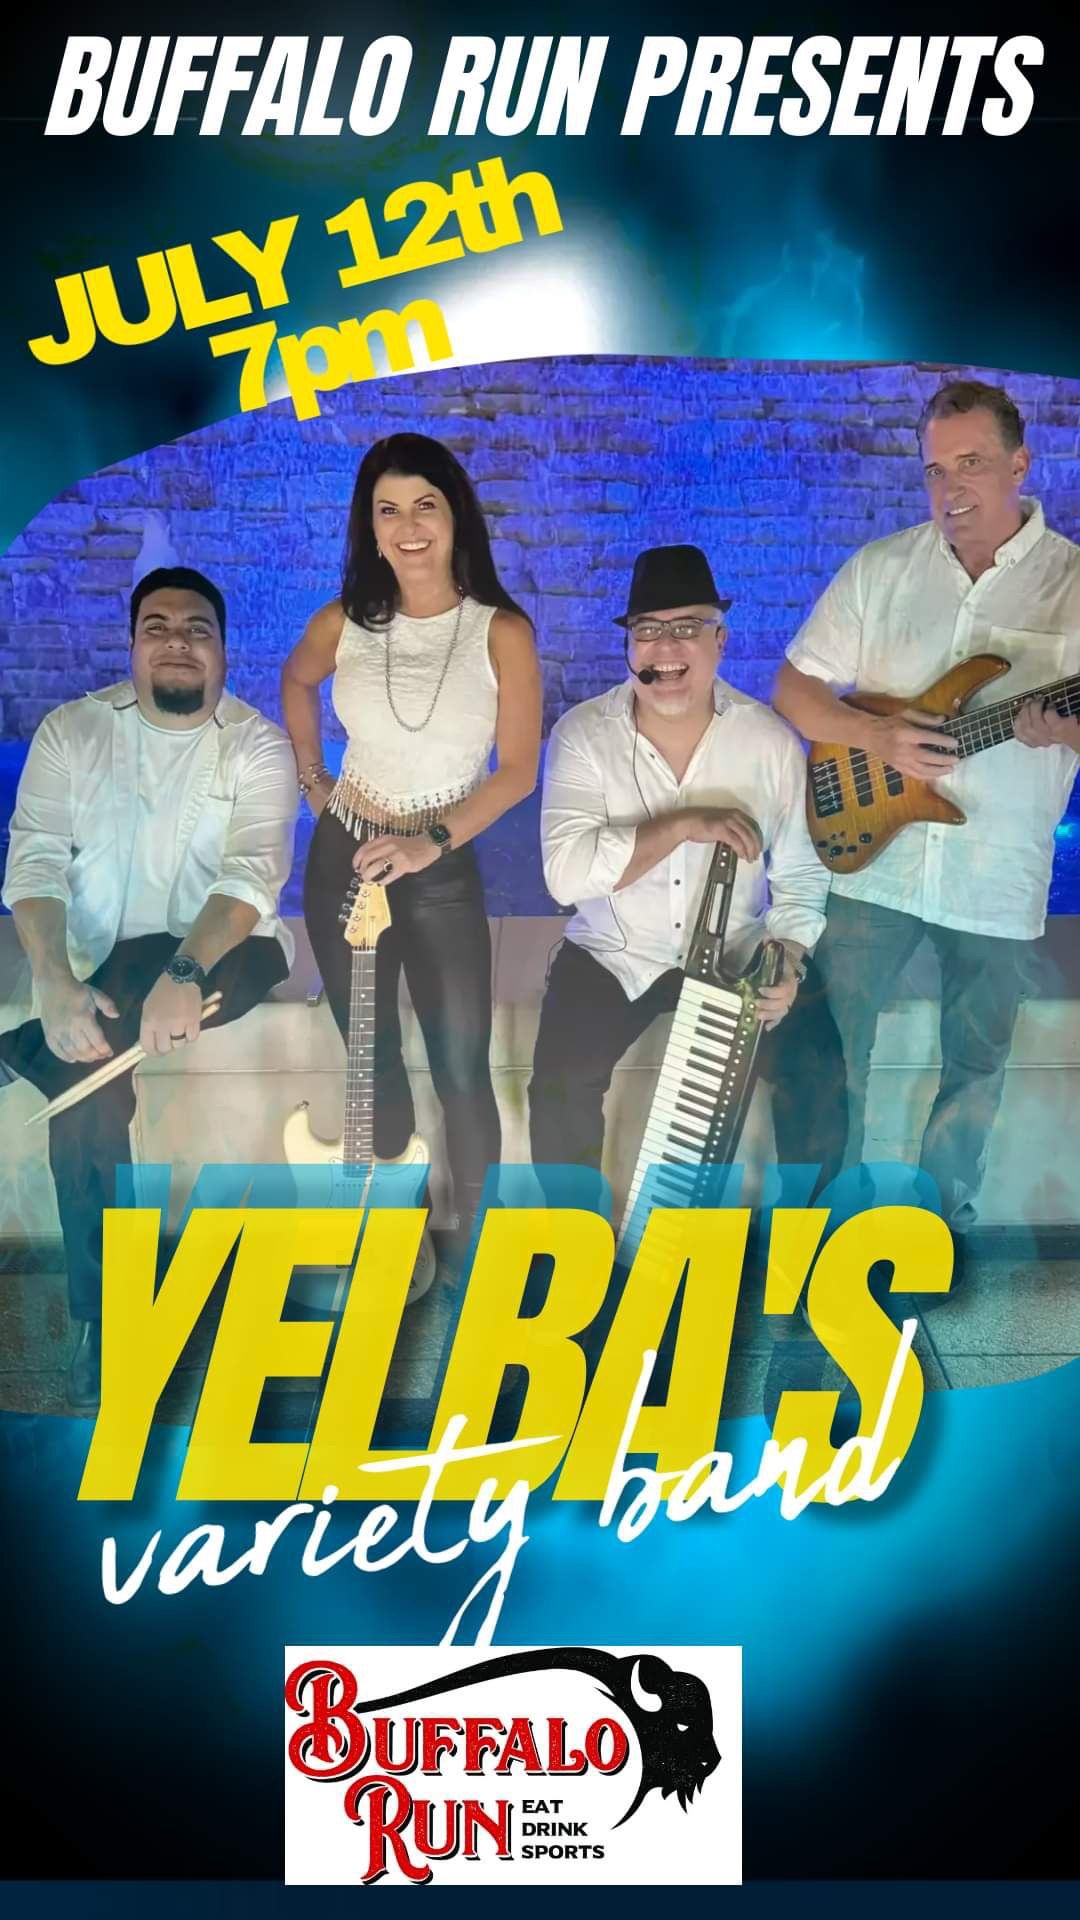 Buffalo Run presents Yelba\u2019s Variety Band!